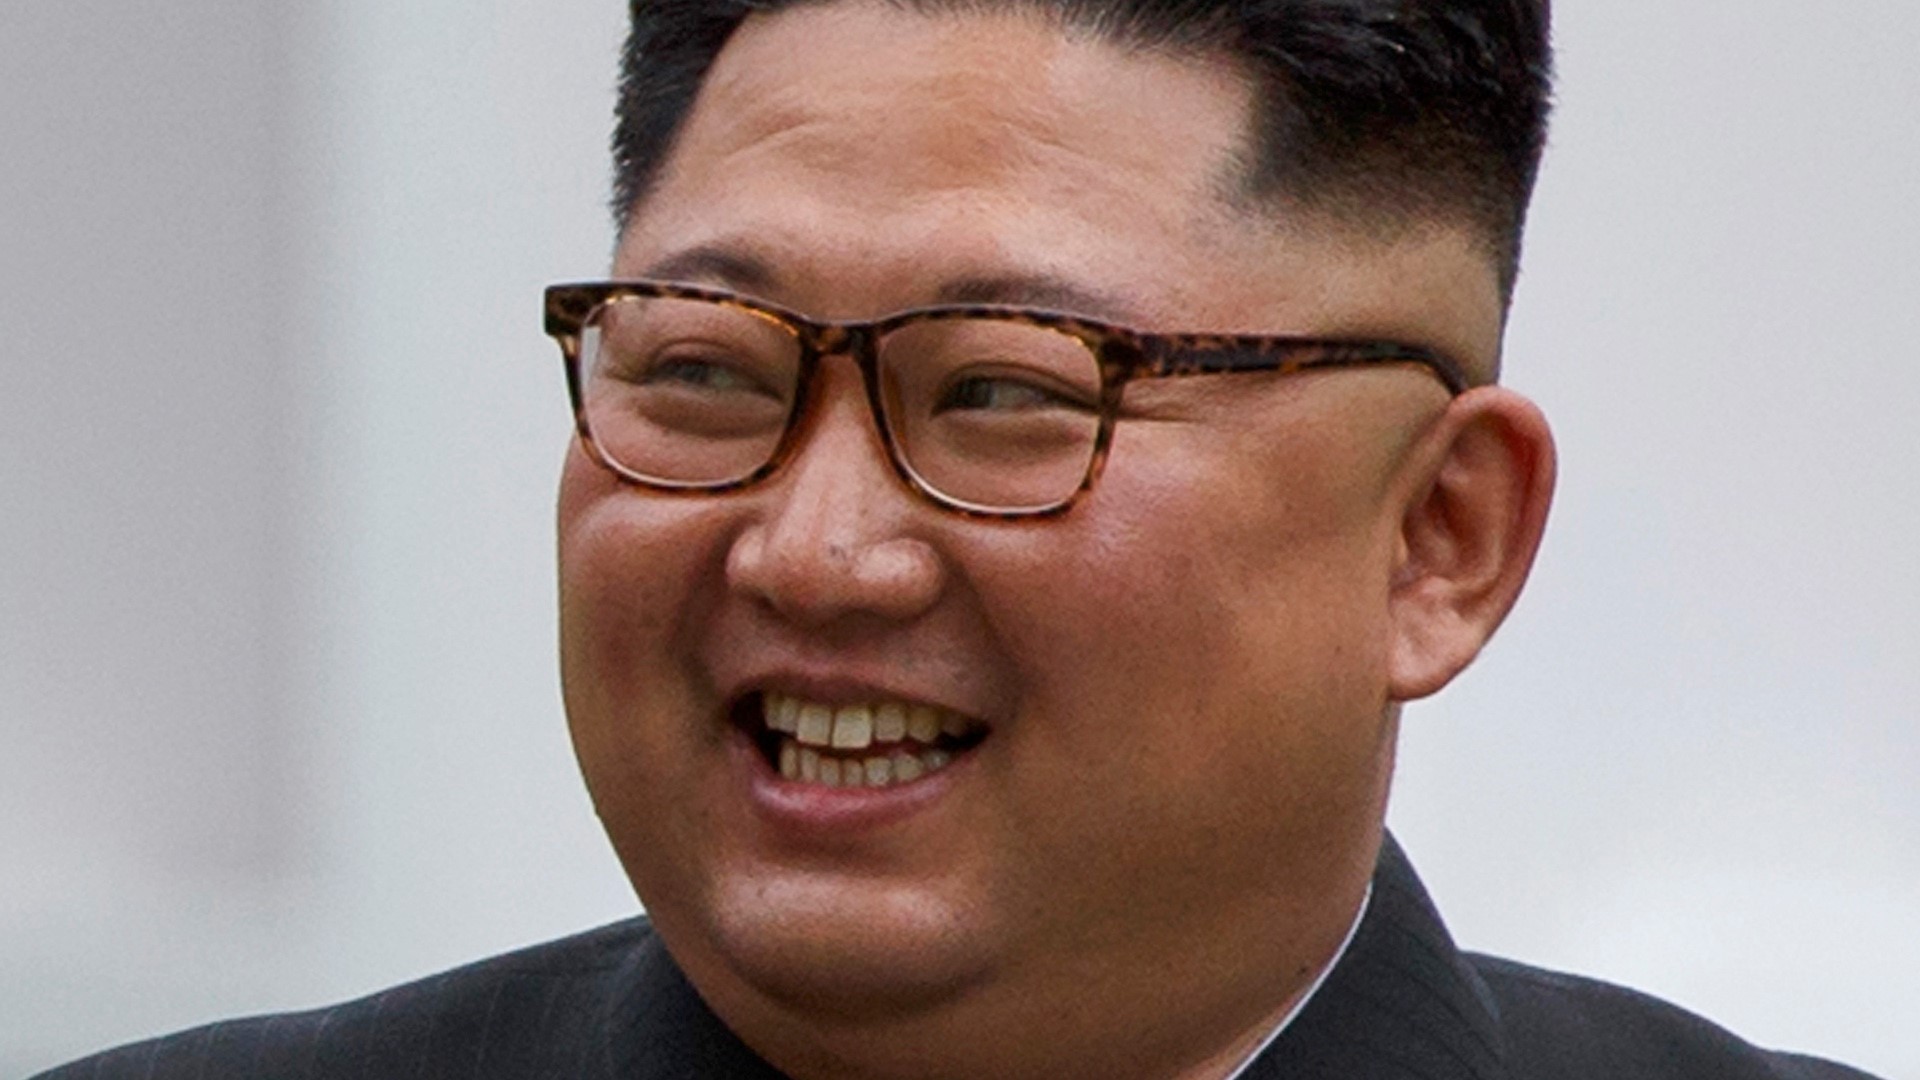 Take a closer look at Kim Jong-Un, the Supreme Leader of North Korea.